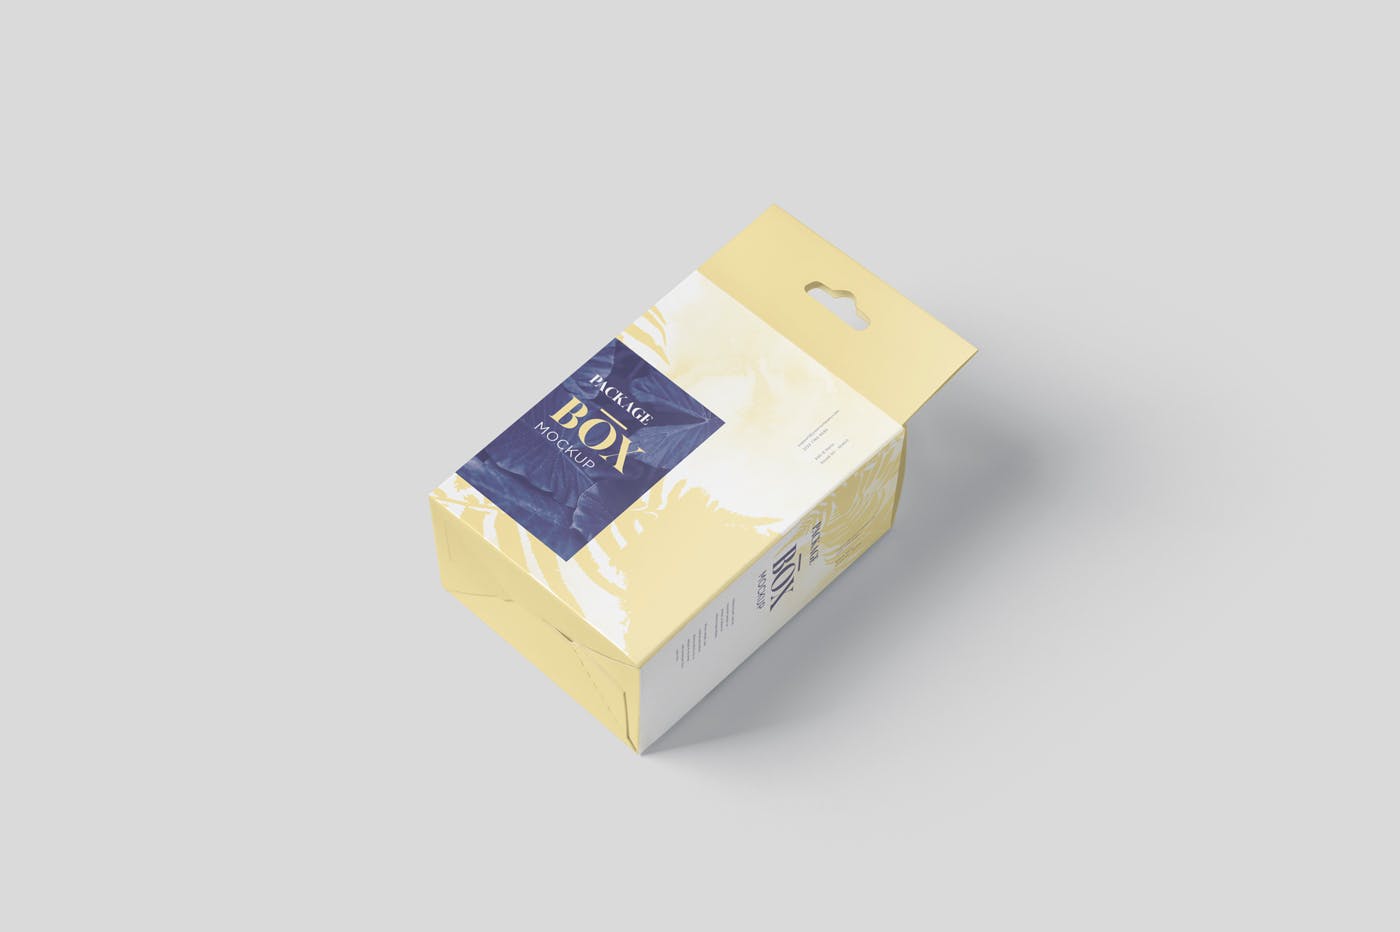 挂耳式扁平矩形包装盒素材中国精选模板 Package Box Mockup Set – Slim Square with Hanger插图(5)